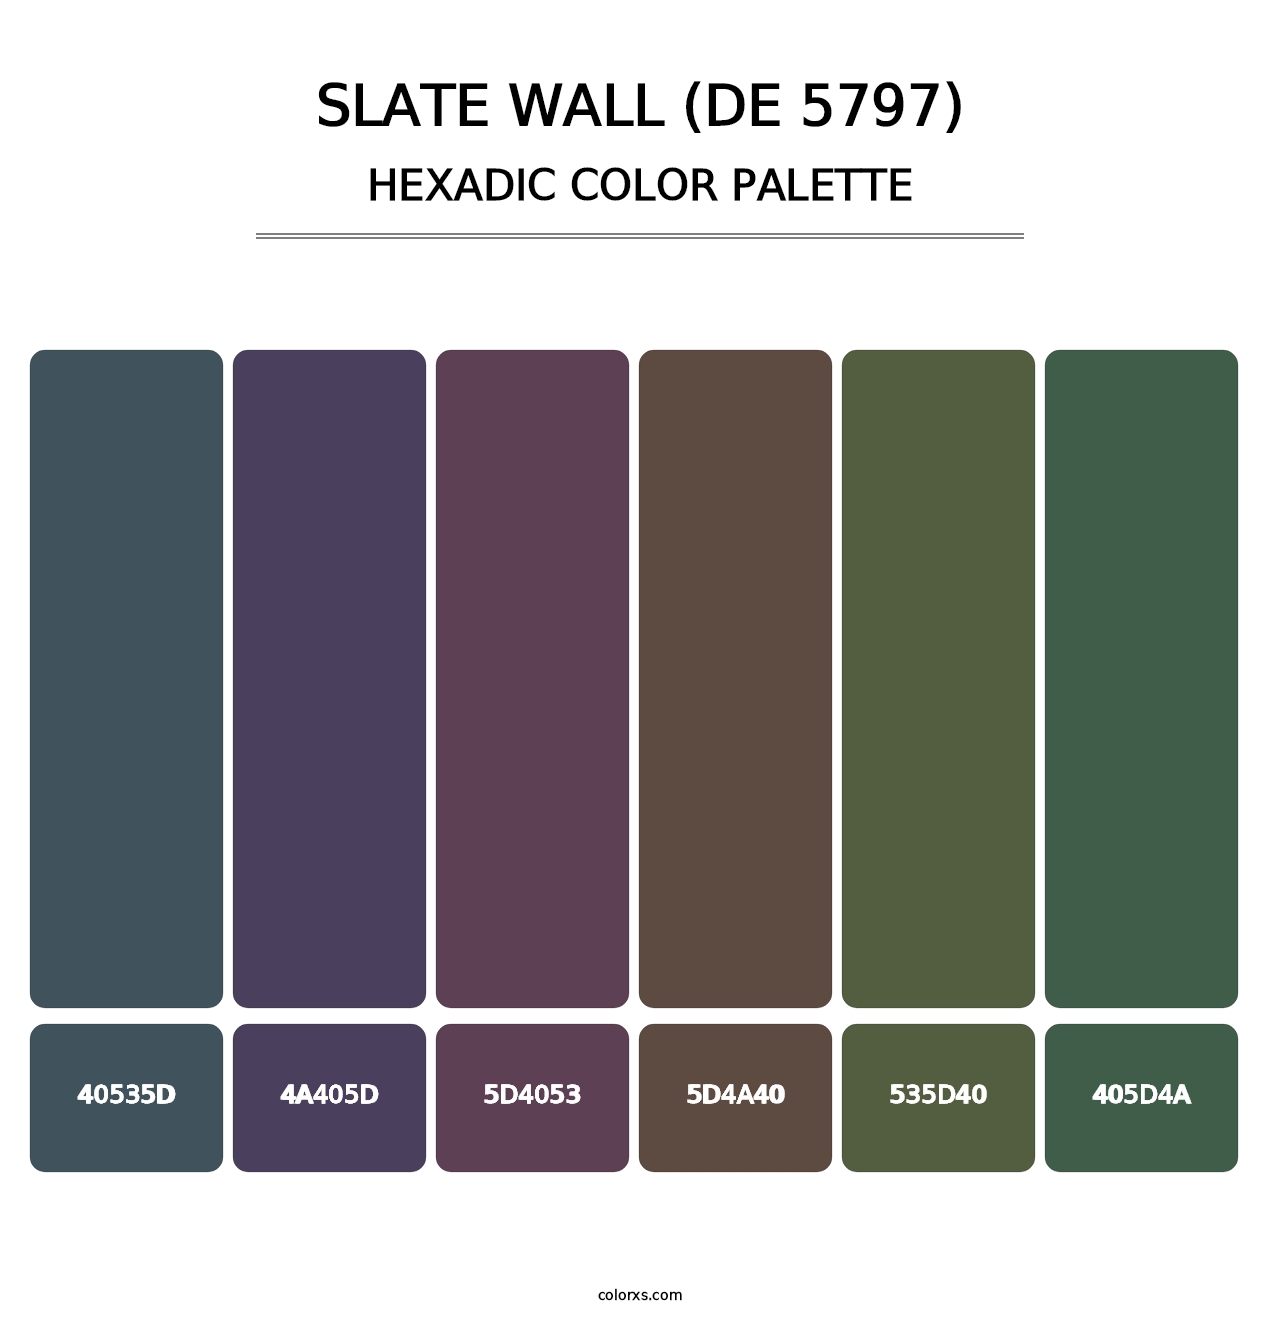 Slate Wall (DE 5797) - Hexadic Color Palette